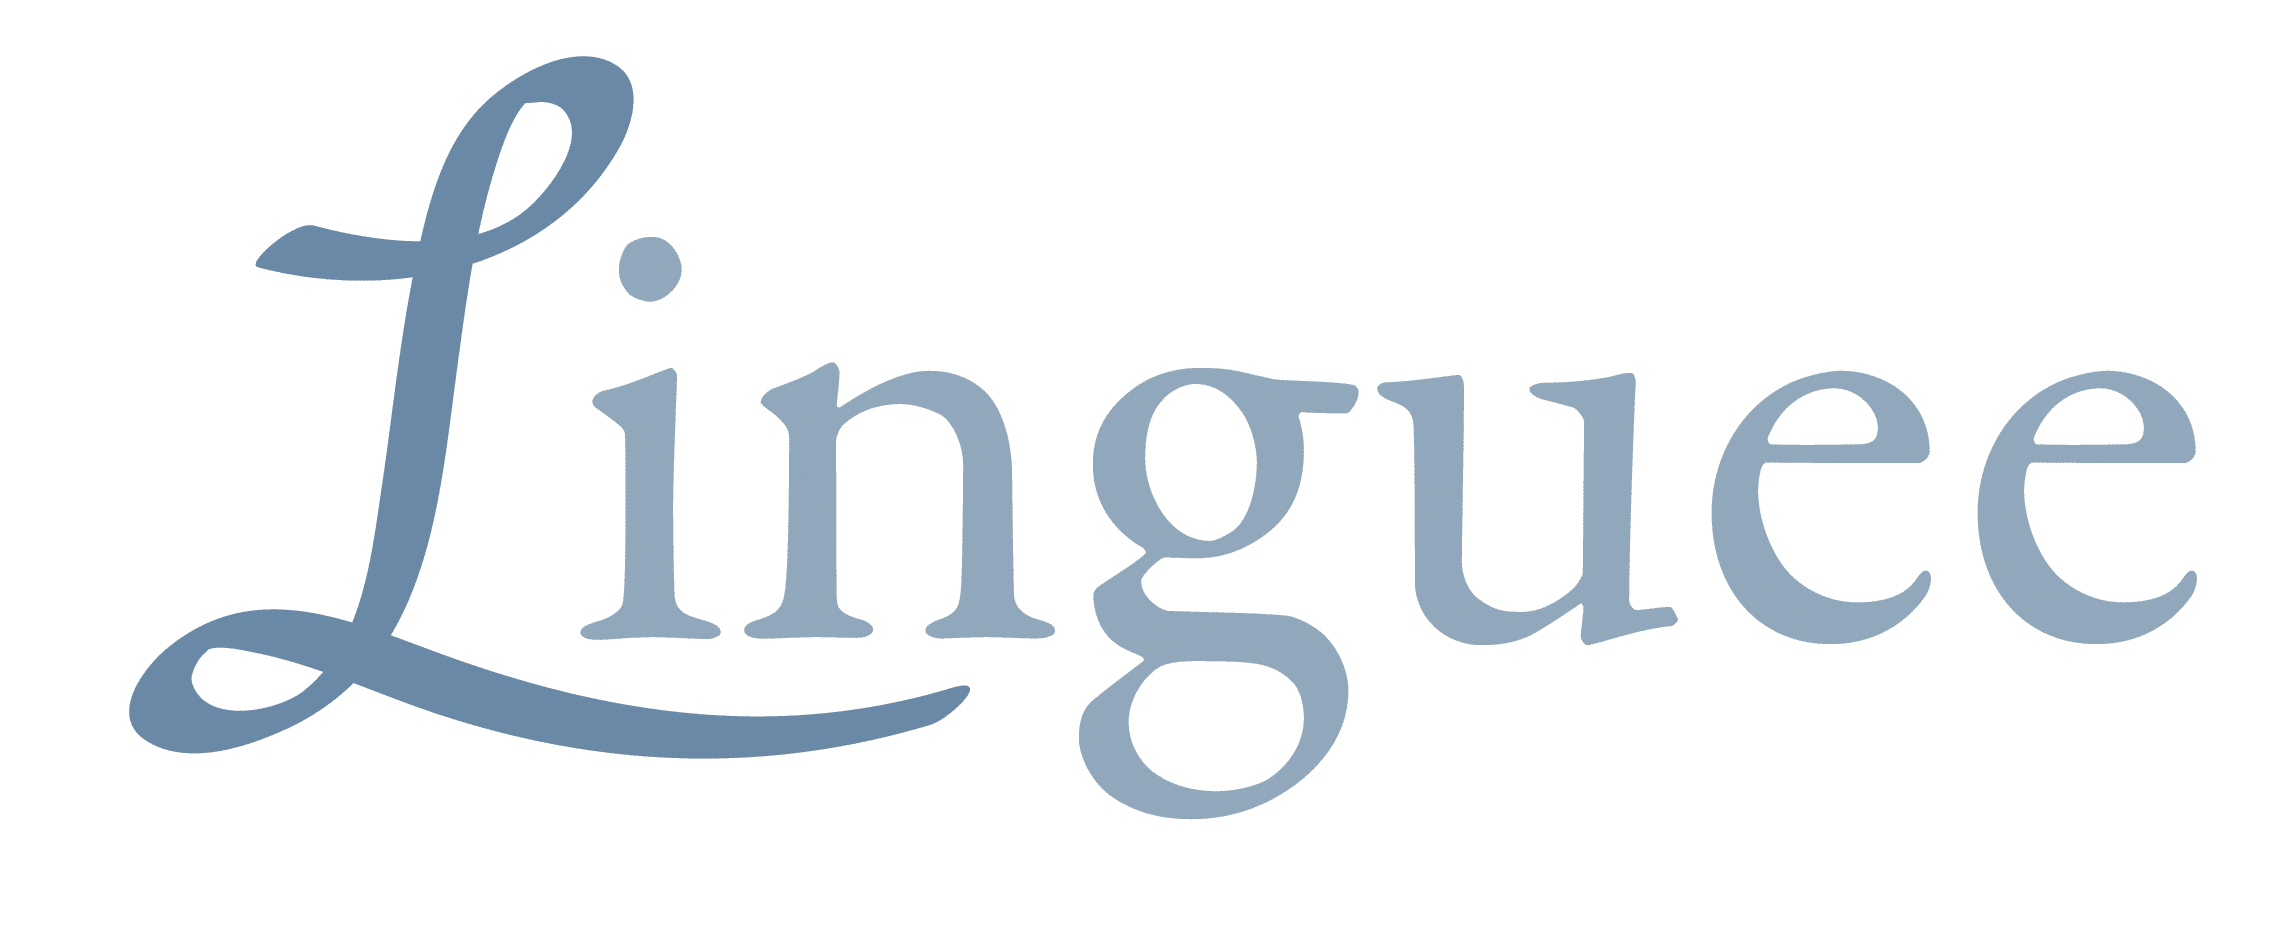 online german learning site Linguee